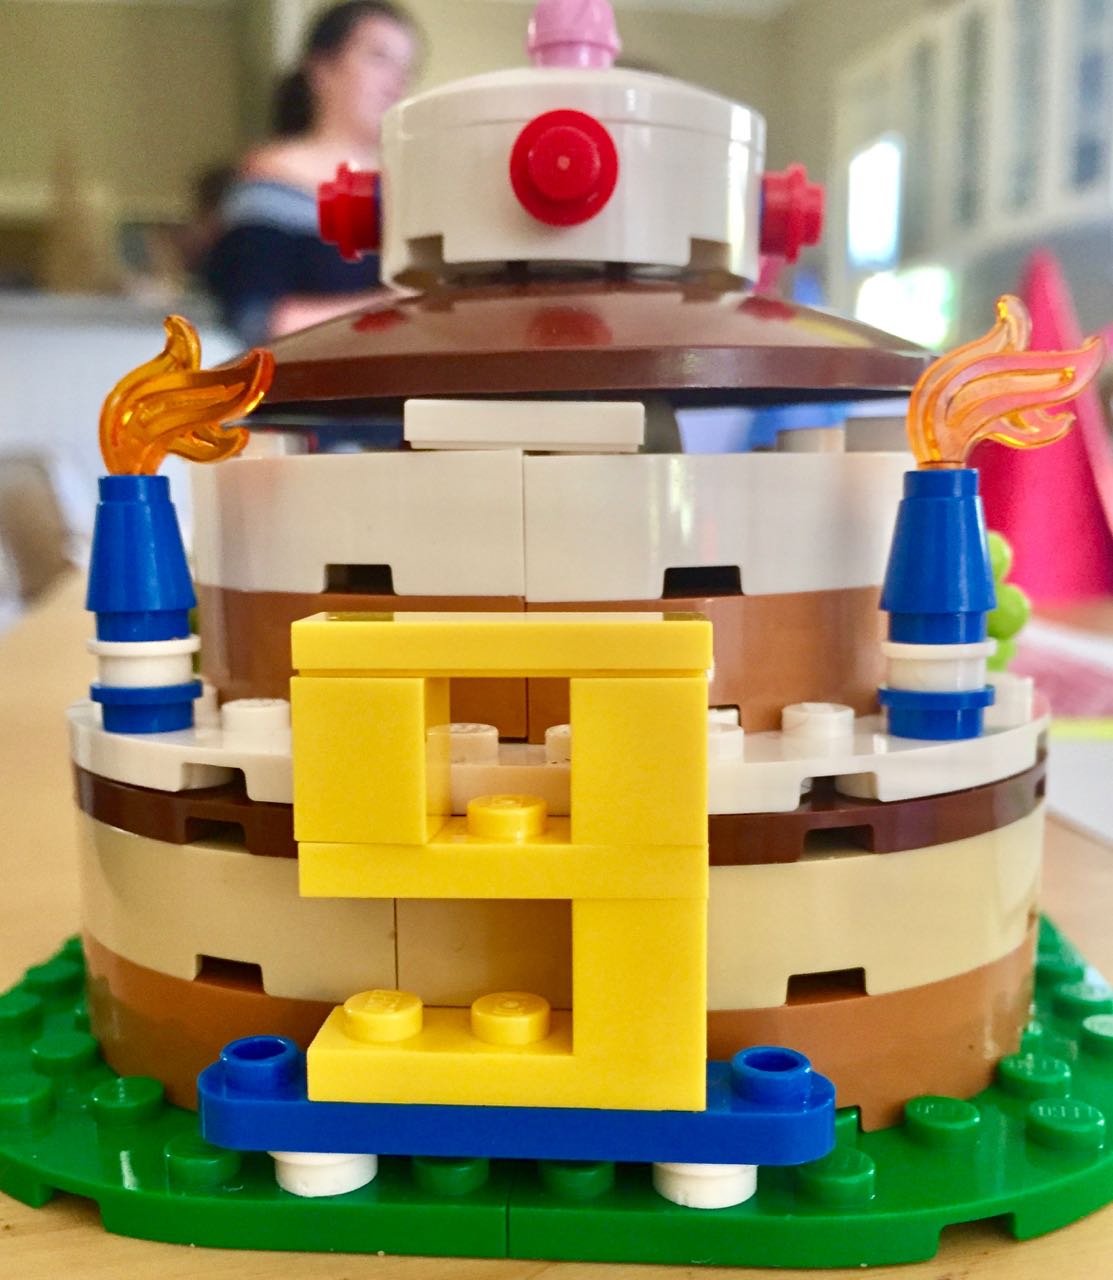 LEGO Birthday Decoration Cake Set 40153